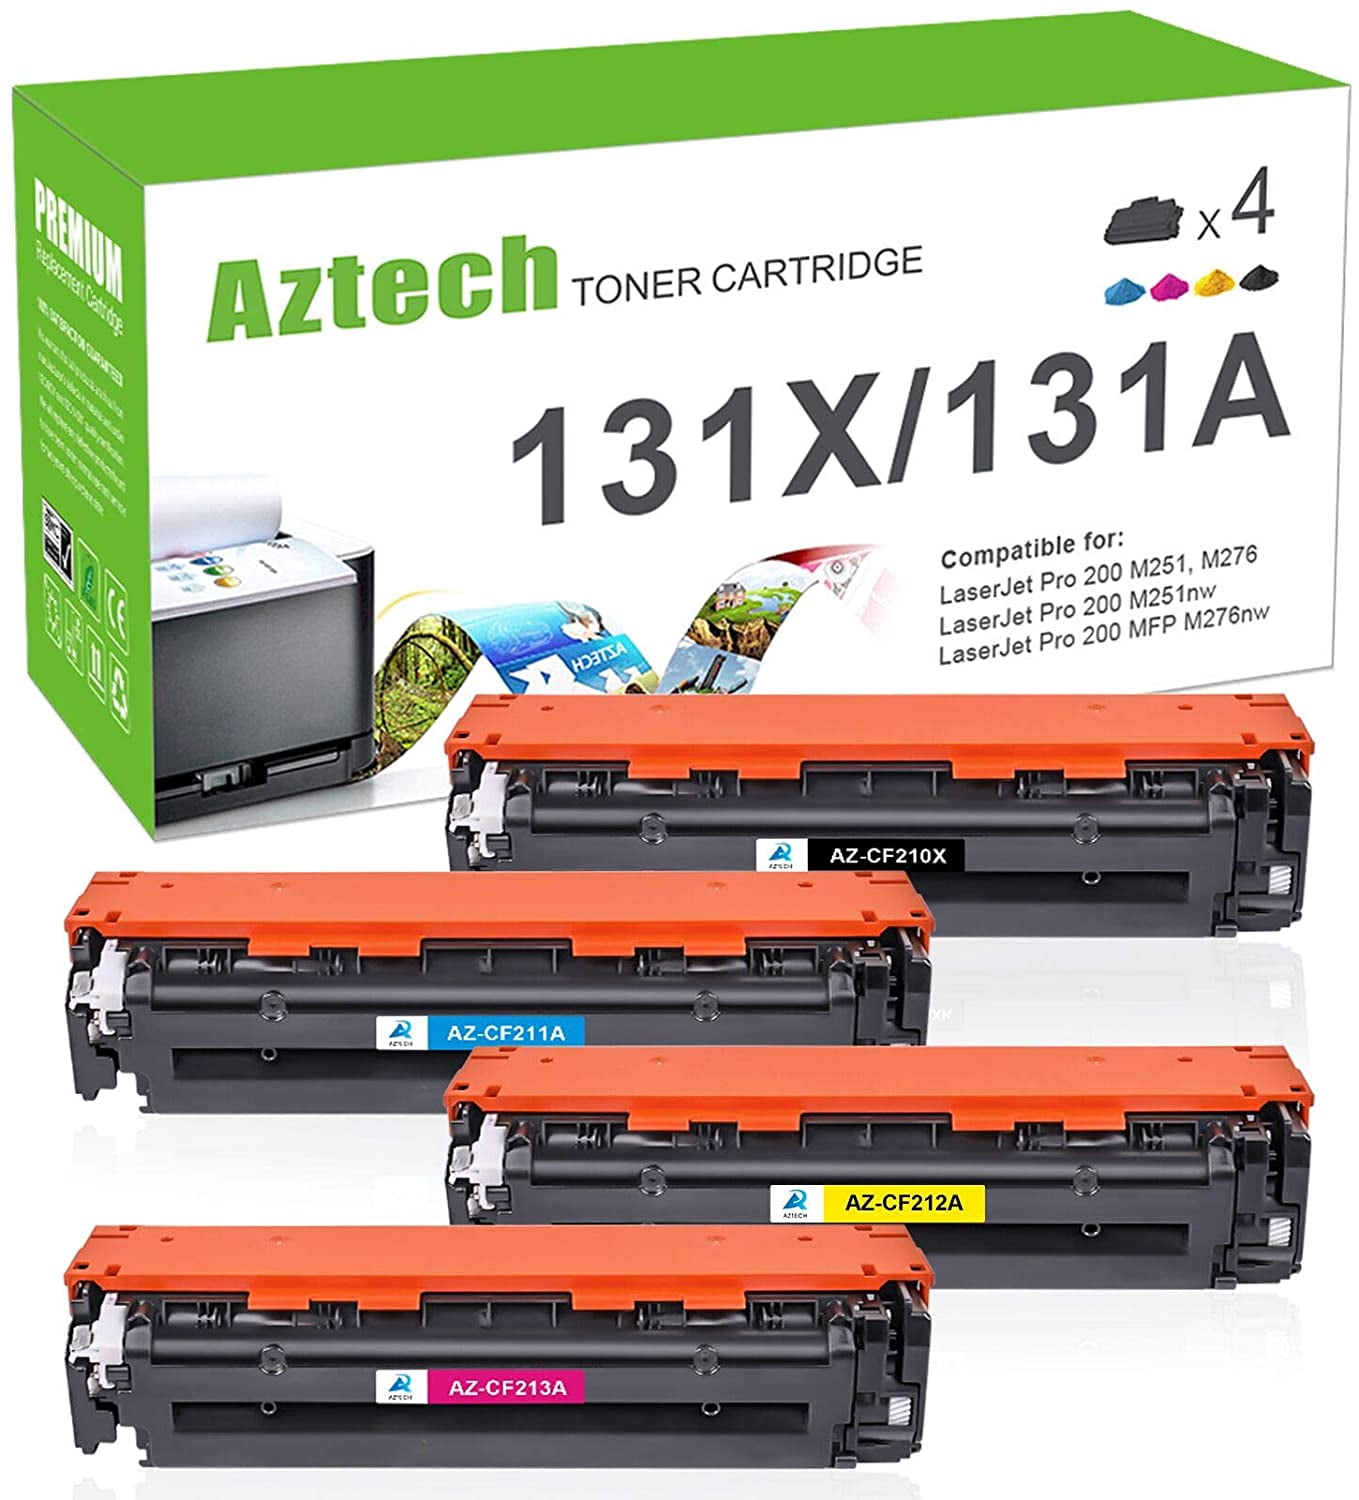 A AZTECH 131X 131A Toner Cartridge for HP CF210X CF211A CF212A CF213A Laserjet Pro 200 M251nw M251n, M276nw M276n Printer Cyan Yellow Magenta, 4-Pack) - Walmart.com